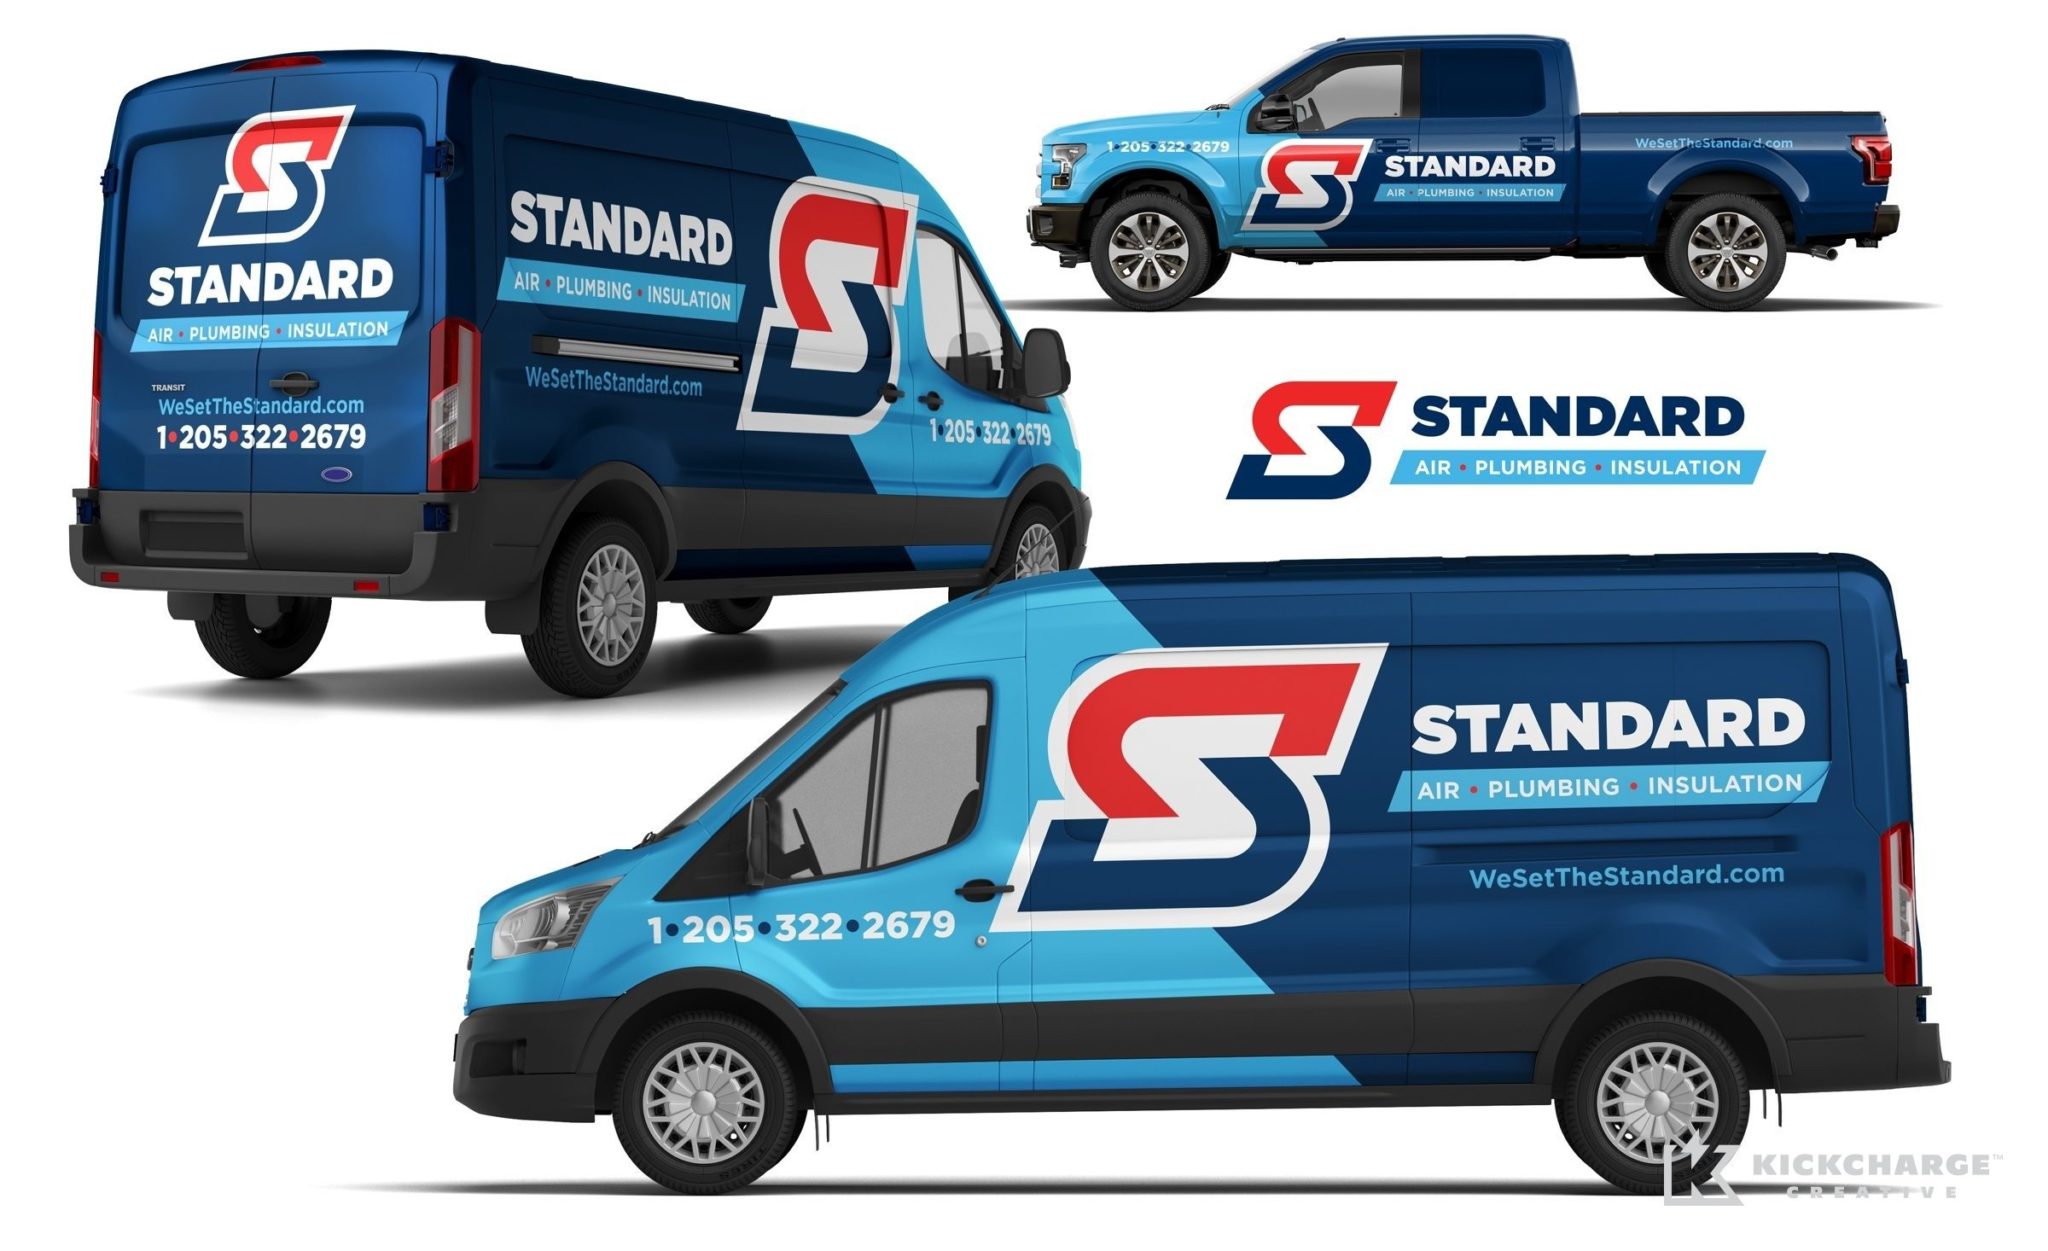 Vehicle wrap design for Standard Air, Plumbing & Insulation, located in Birmingham, AL.